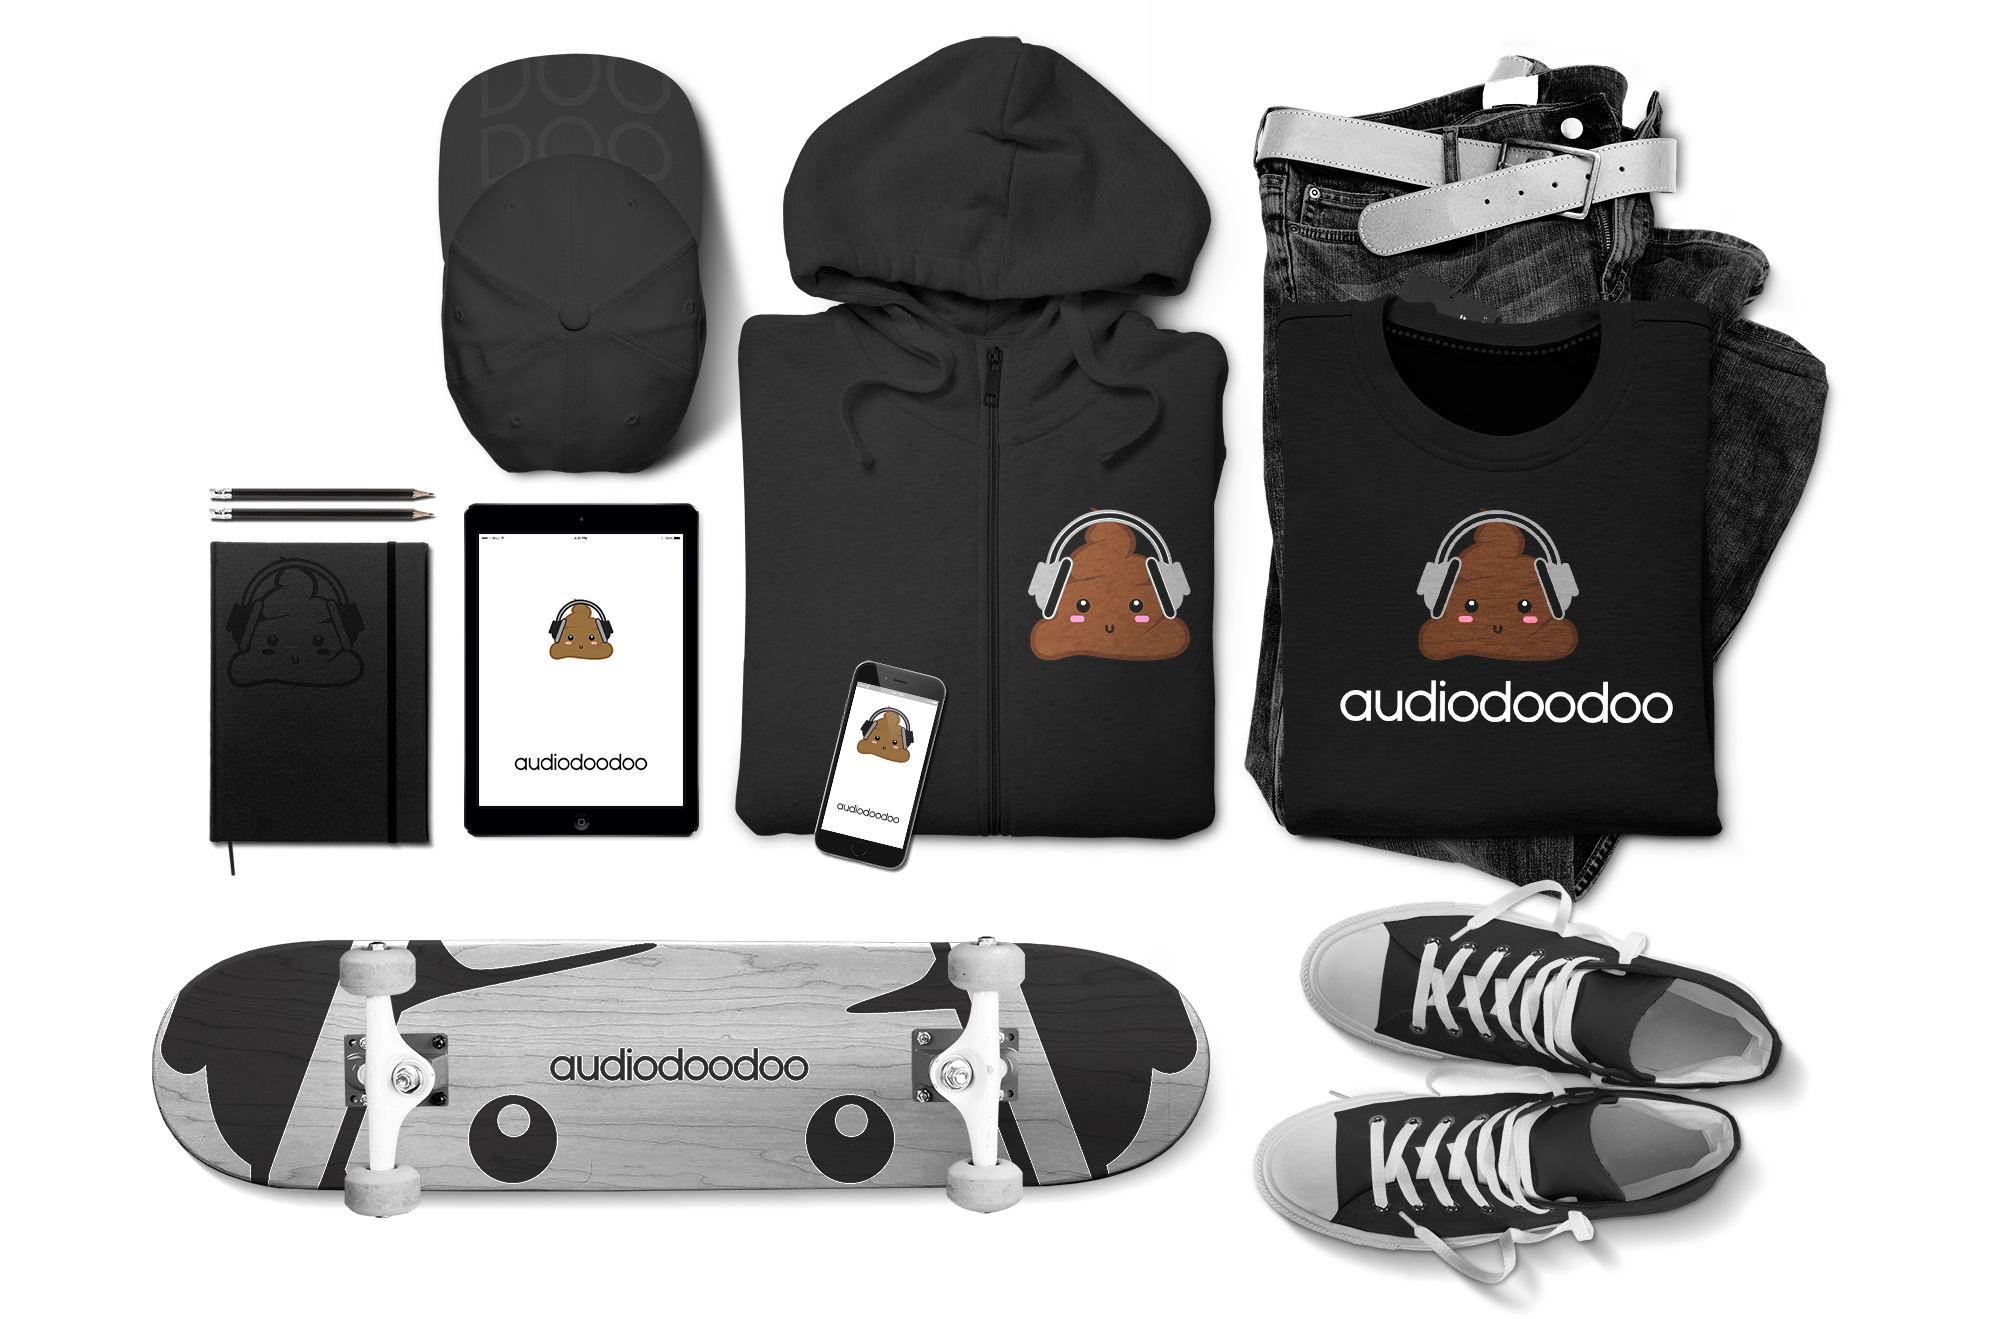 audiodoodoo_apparel_gear1